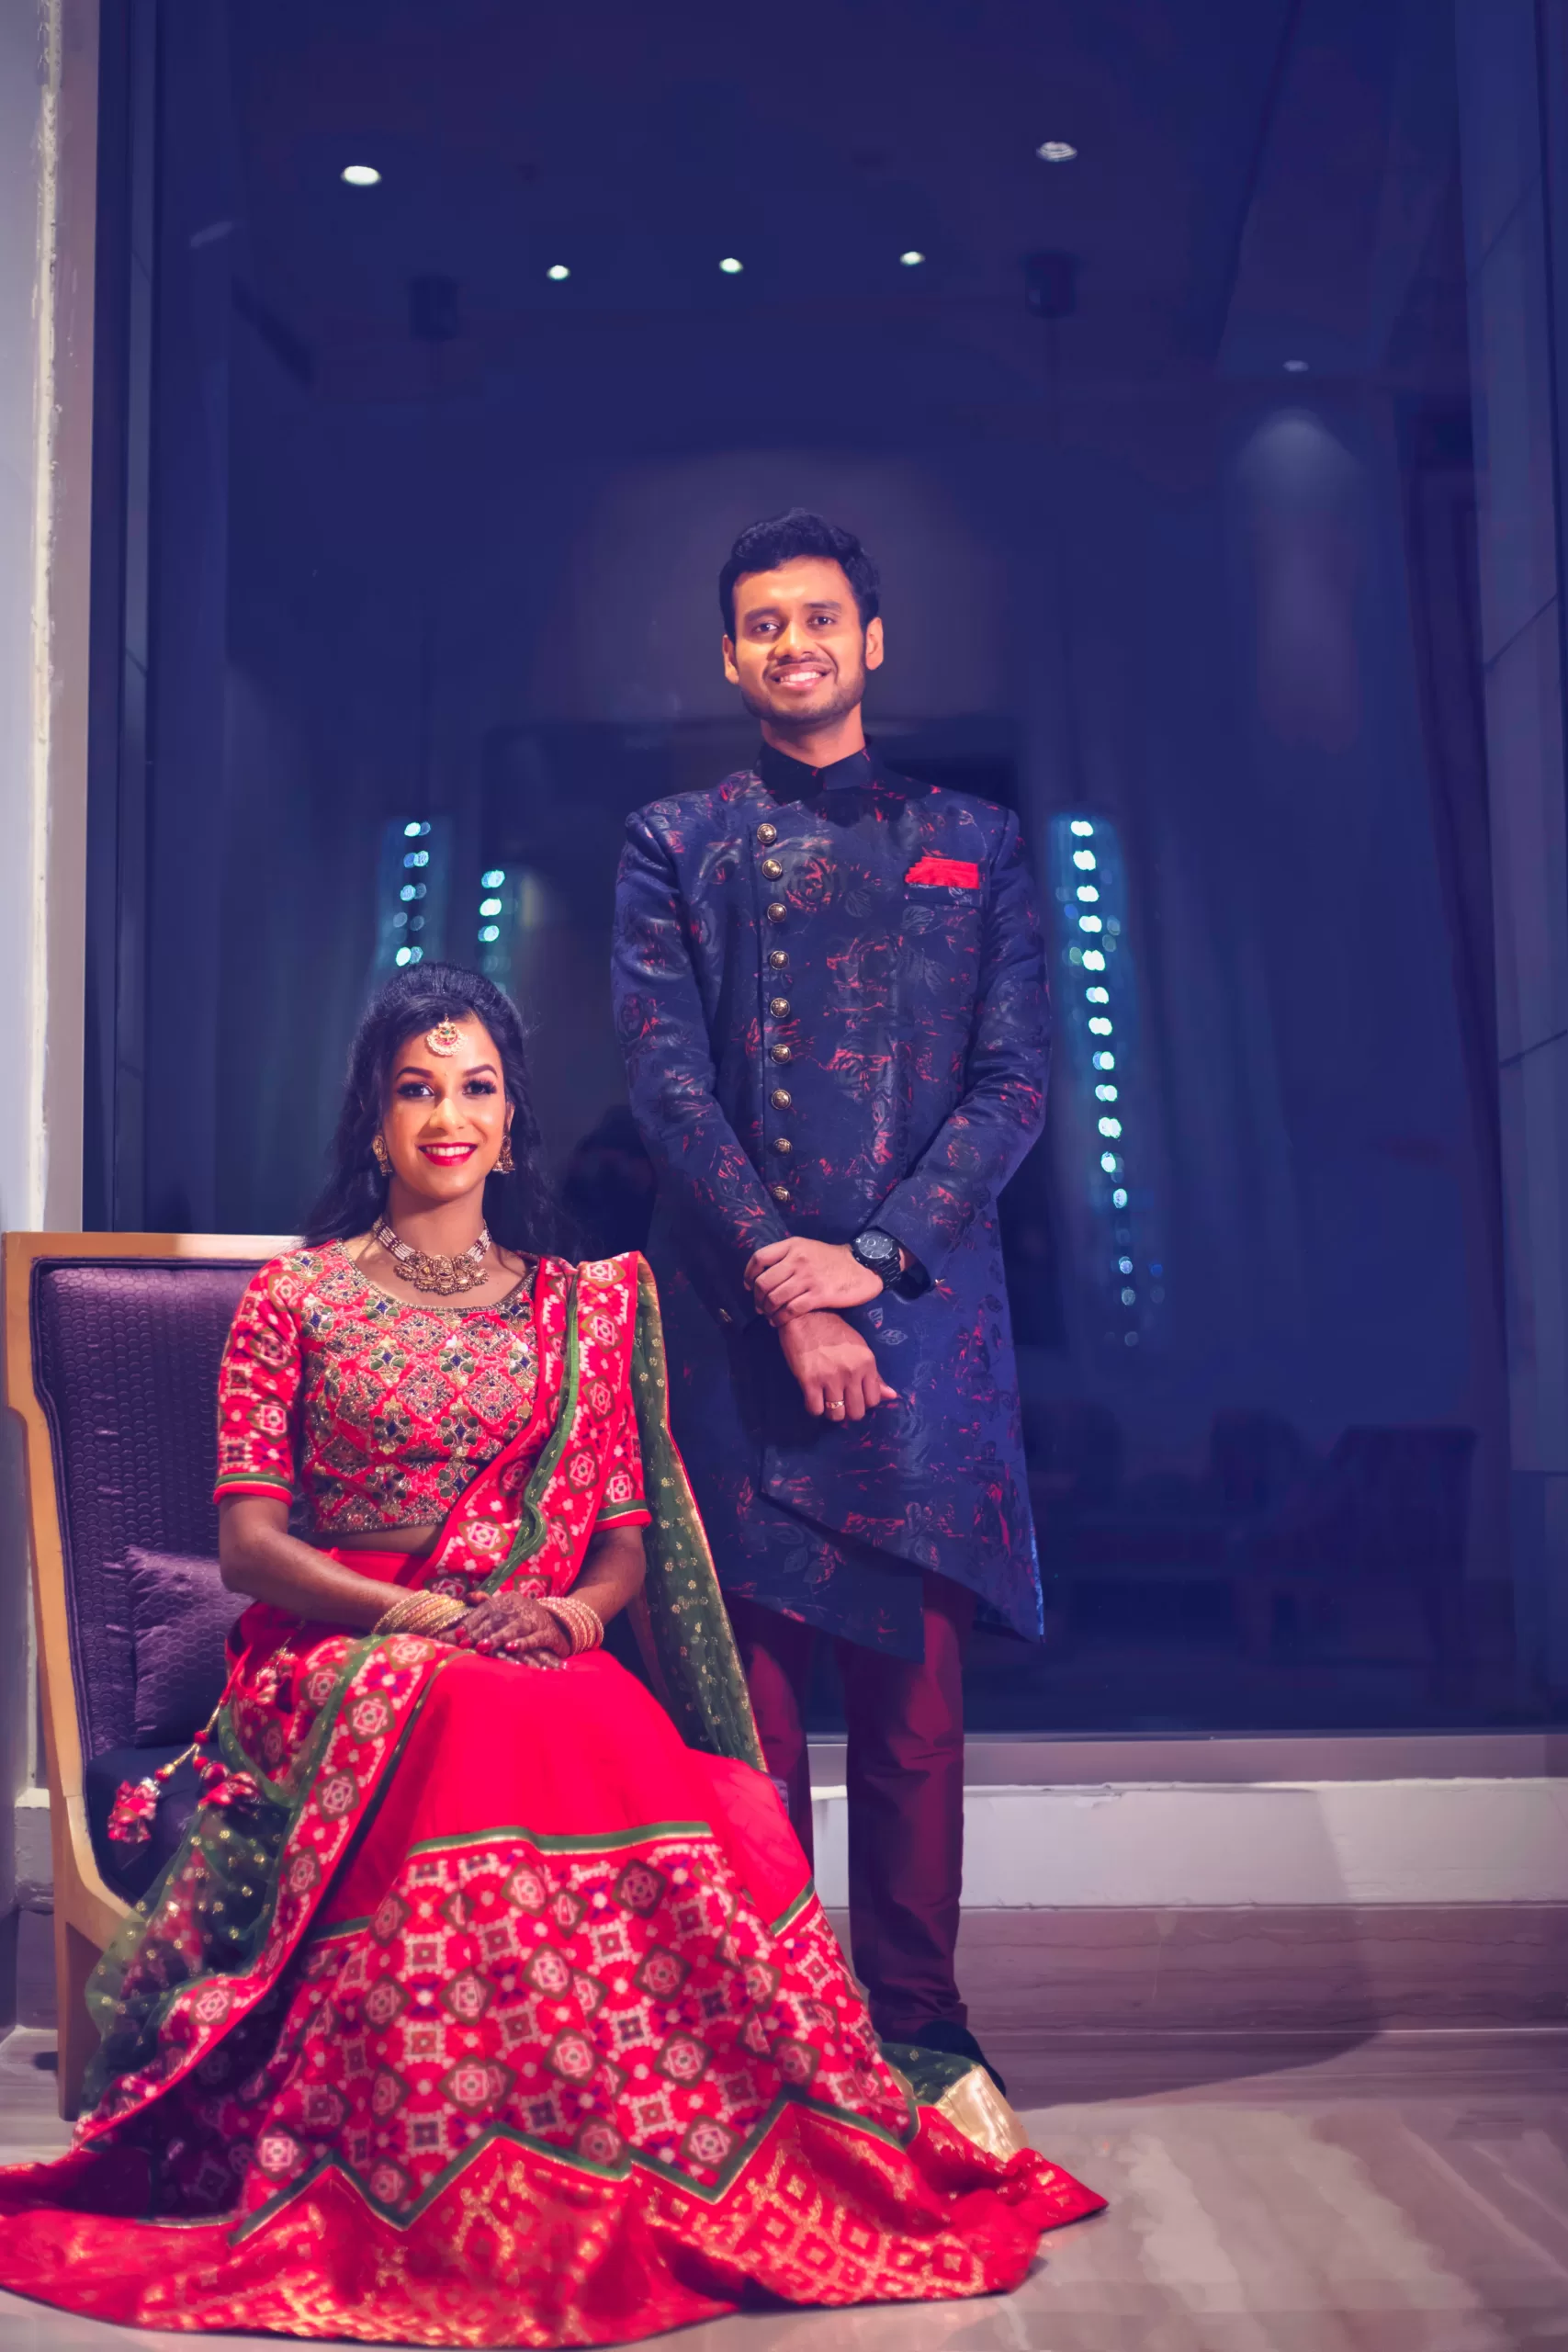 That smile | Bridal poses, South indian bride, Indian bride